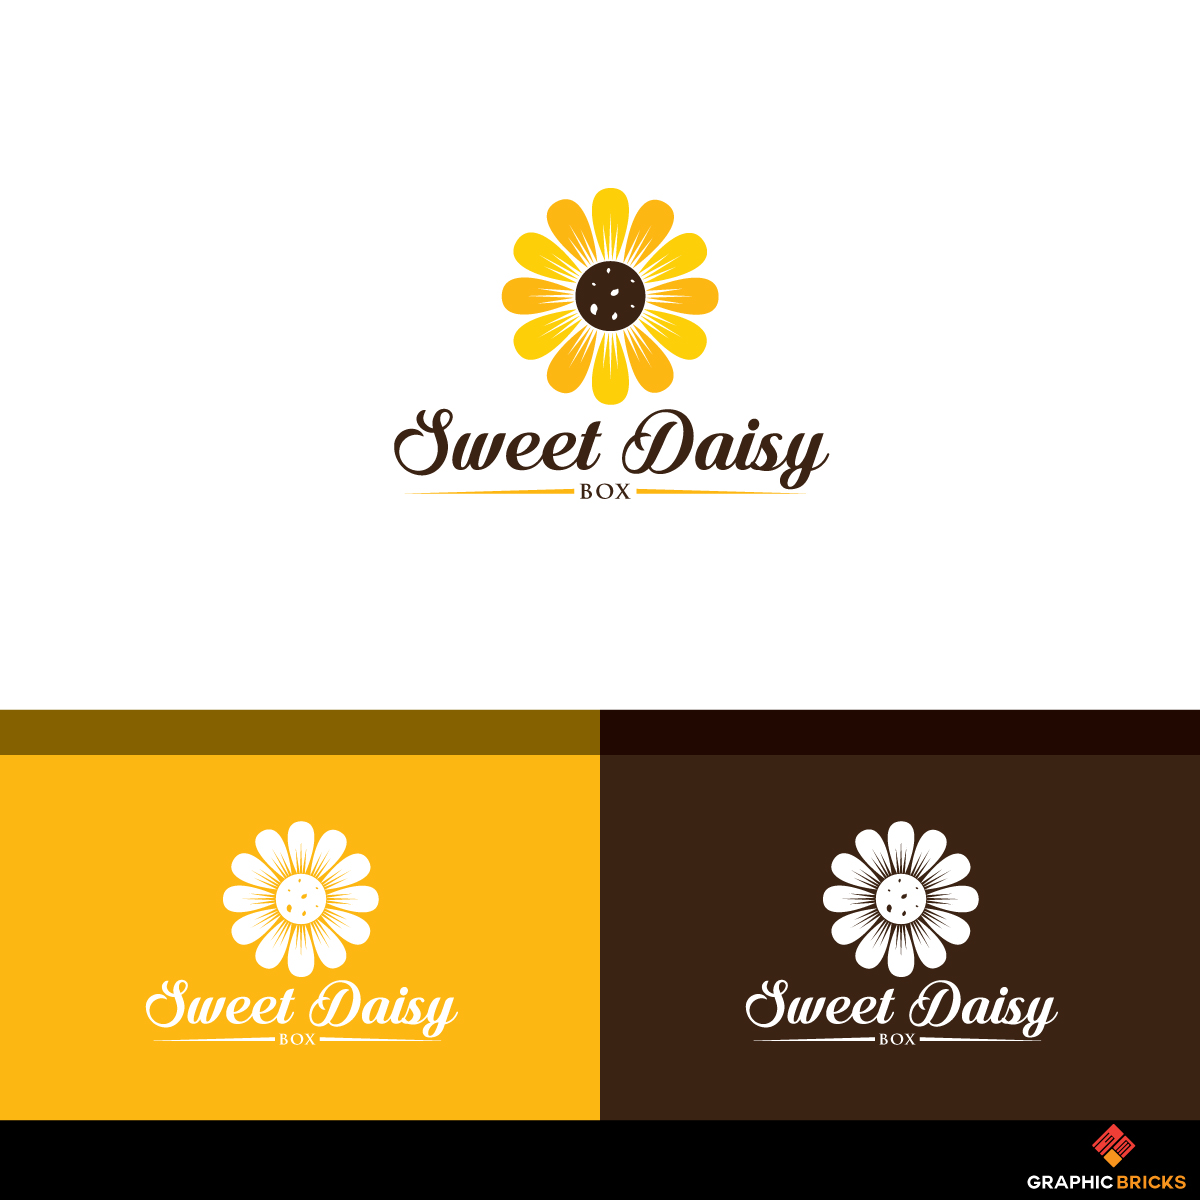 Elegant, Playful, It Company Logo Design for Sweet Daisy Box.